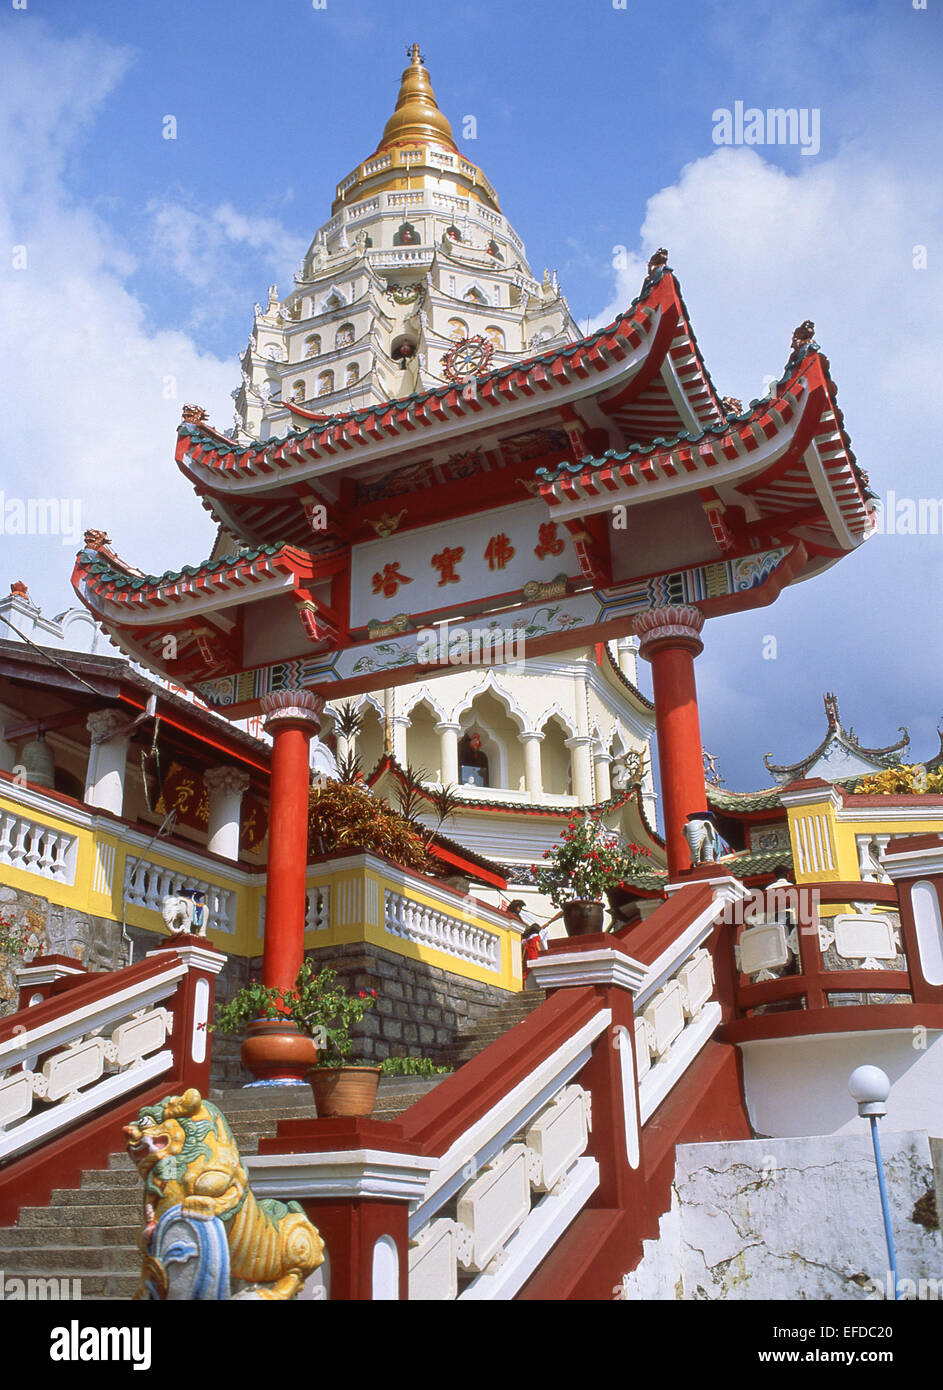 Pagoda at the Kek Lok Si (Temple of Sukhavati) Buddhist Temple, Air Itam, Penang, Penang State, Malaysia Stock Photo